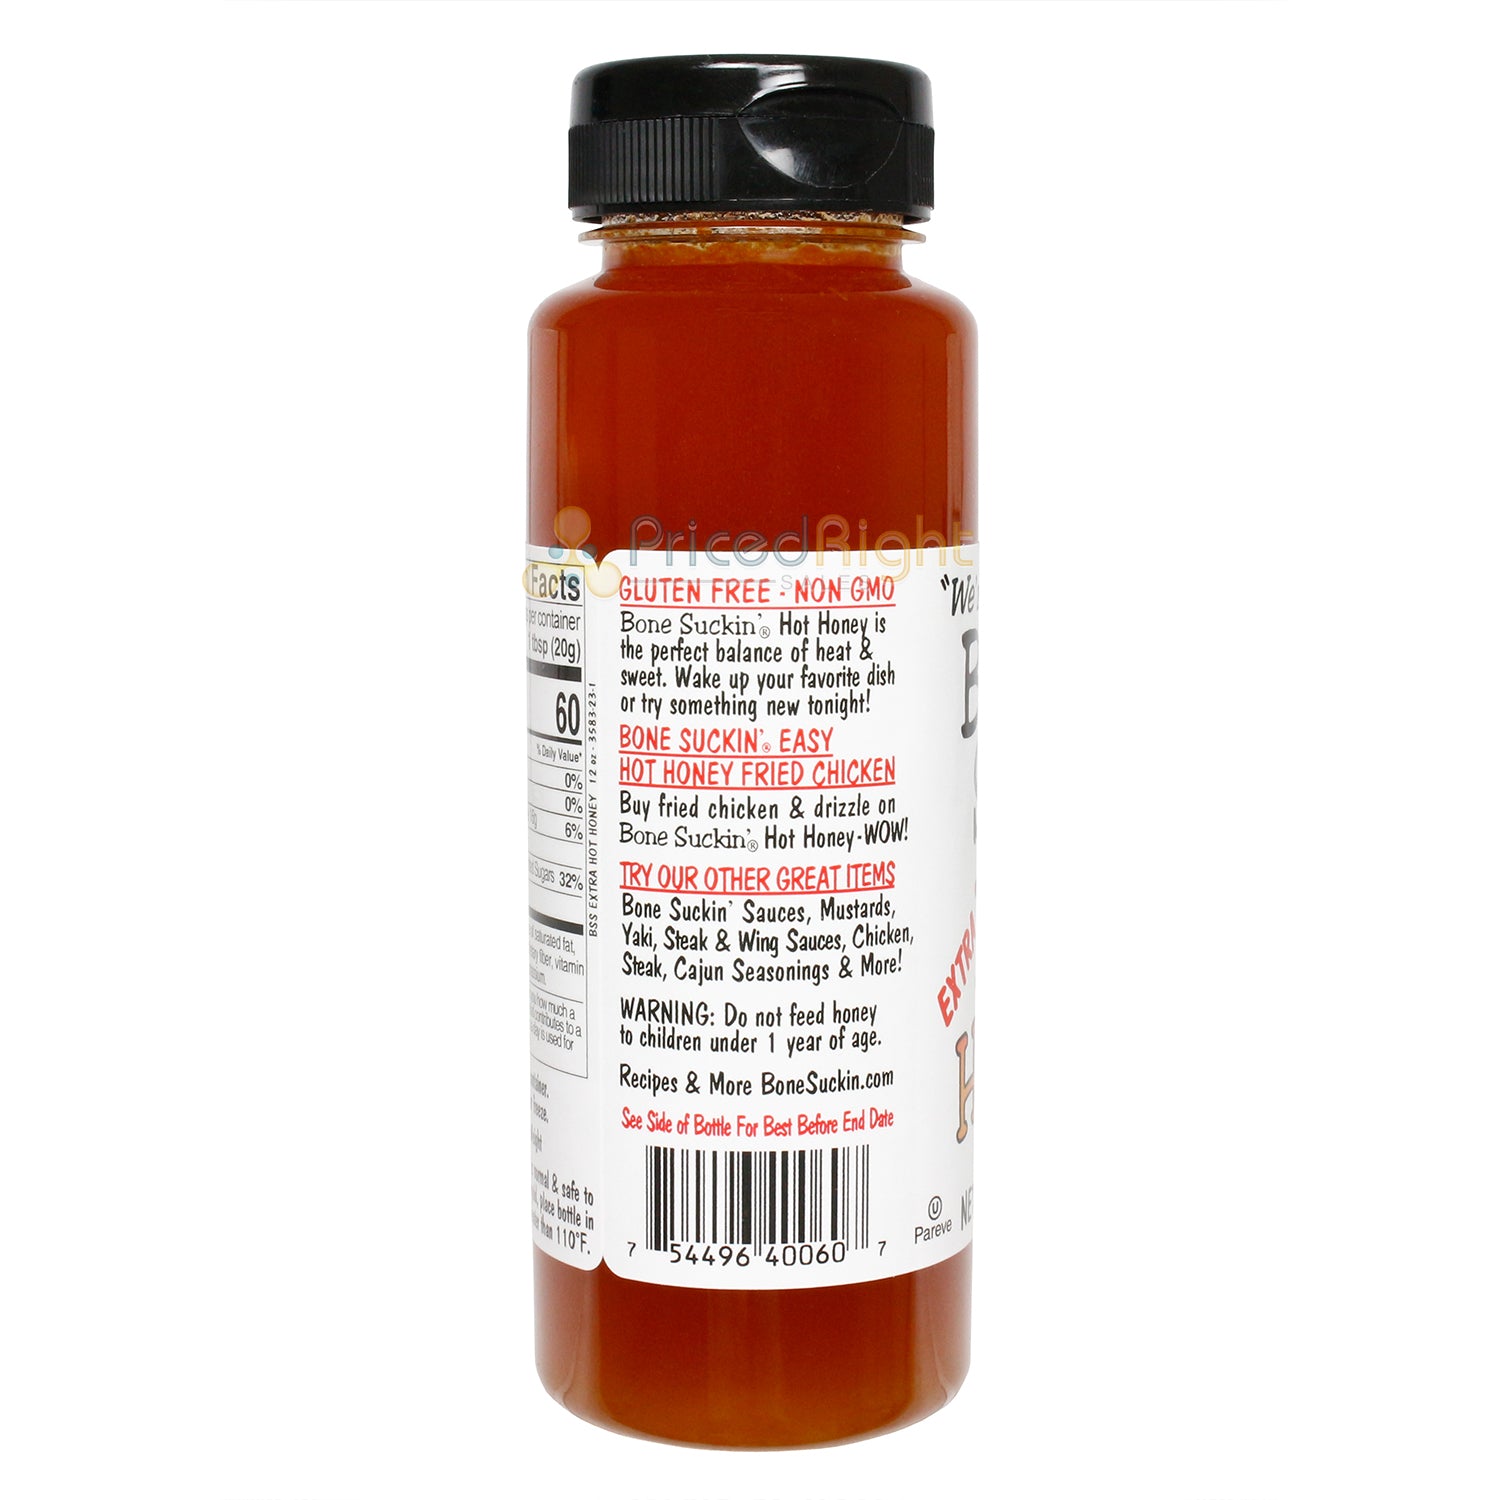 Bone Suckin' Extra Hot Honey Condiment Gluten Free Non GMO No HFCS 12 Ounce